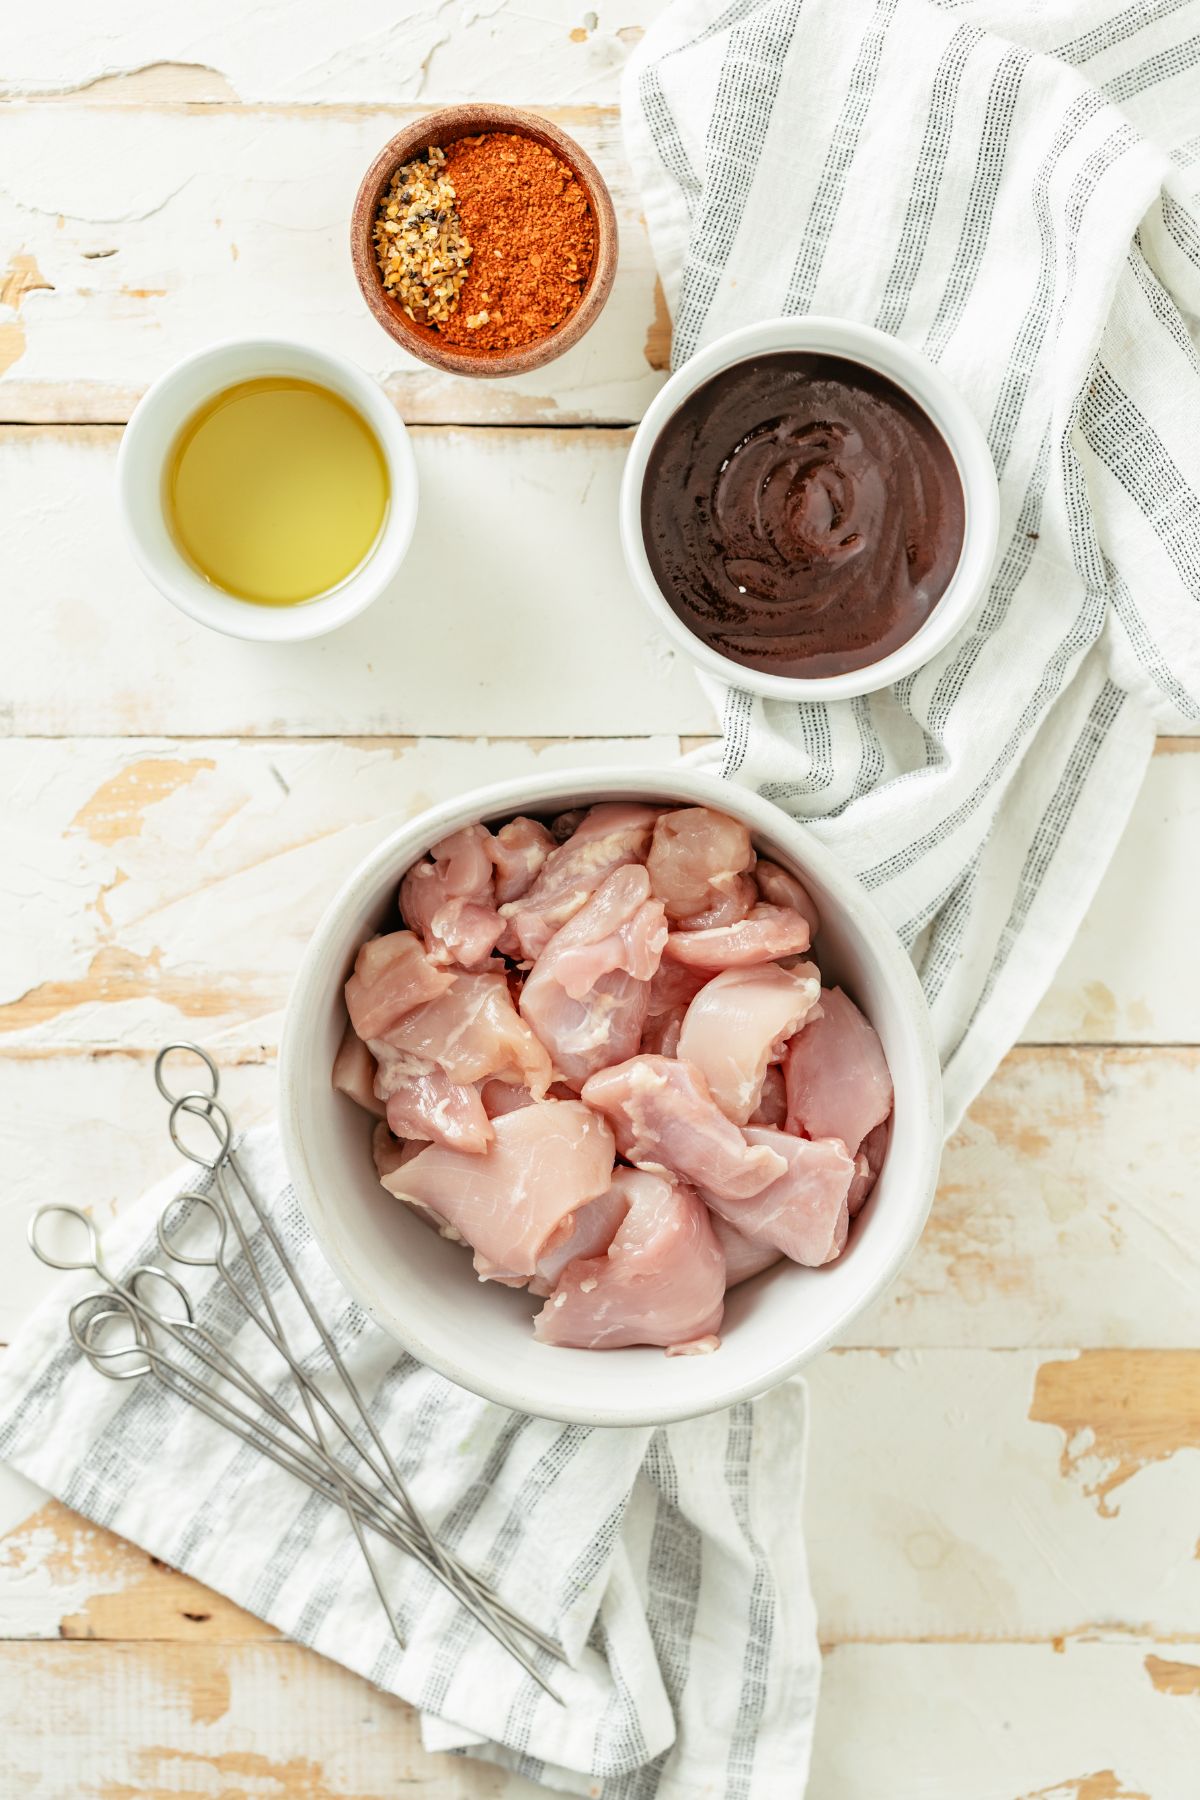 Ingredients for chicken skewers: diced chicken thighs, steak seasoning, BBQ dry rub, avocado oil, bourbon BBQ sauce